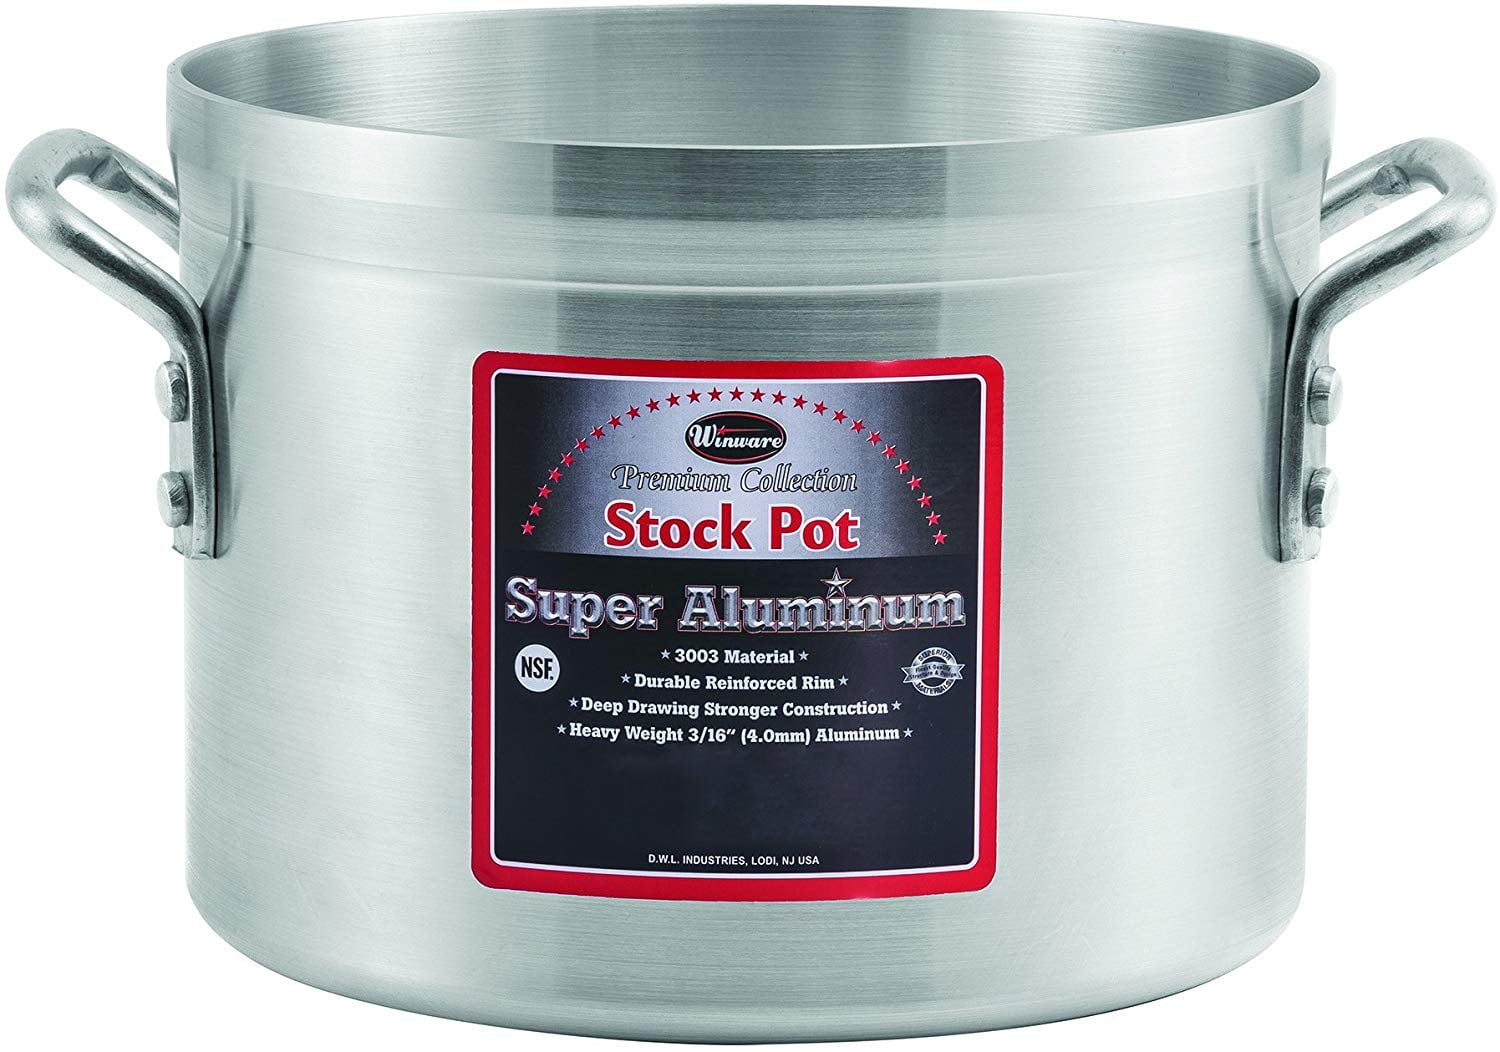 Winco 32 Qt. Aluminum Stock Pot Steamer Basket